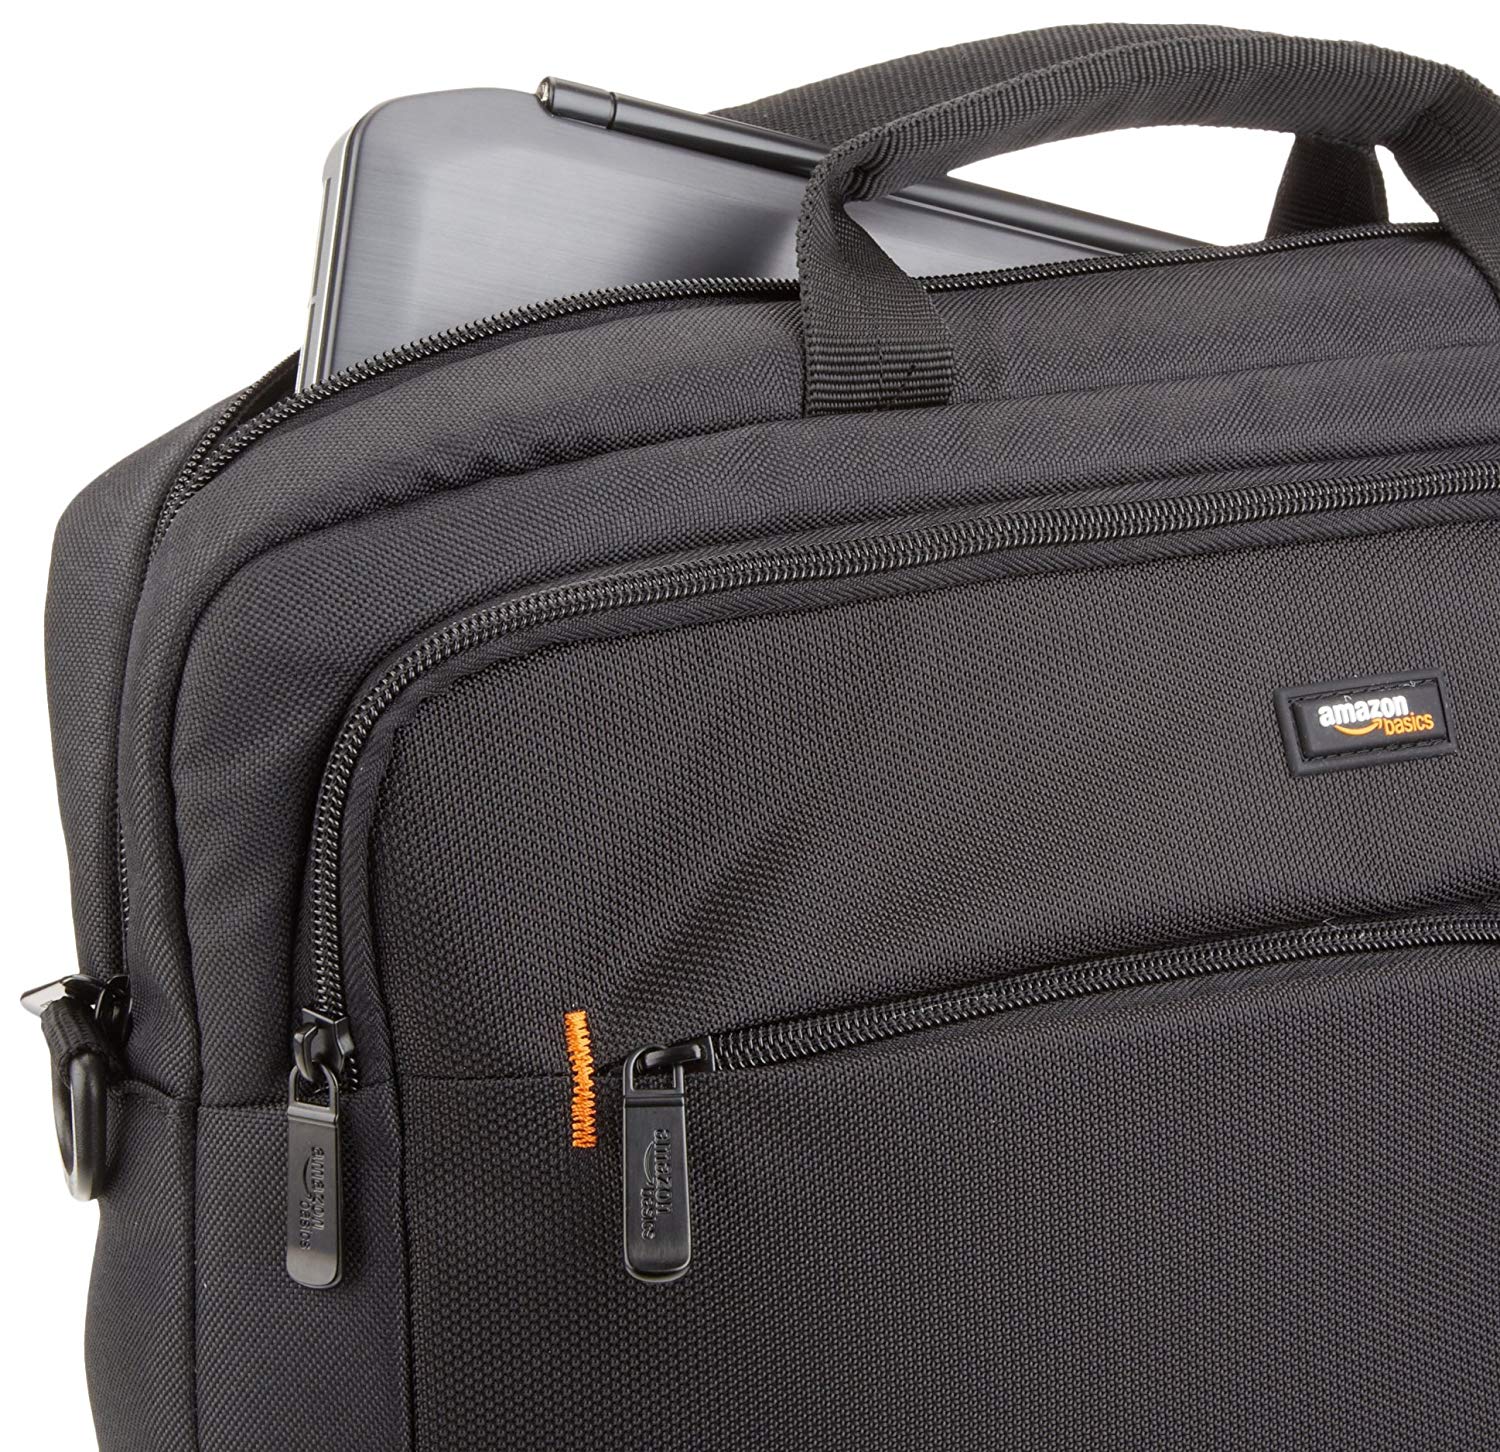 AmazonBasics 15.6-Inch Laptop and Tablet Bag - Nylon Material